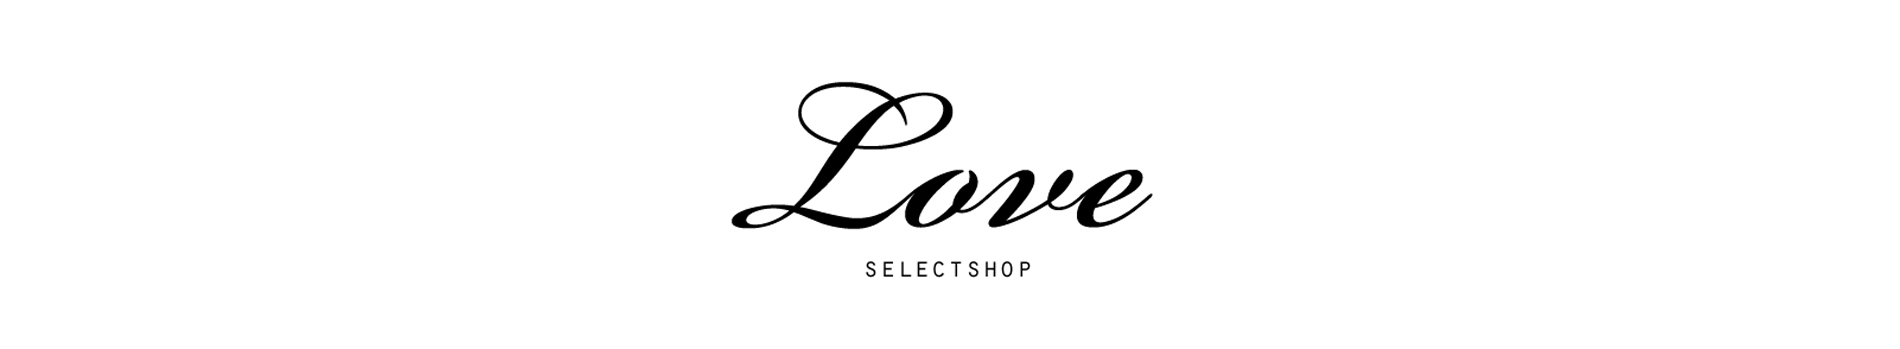 select shop LOVE